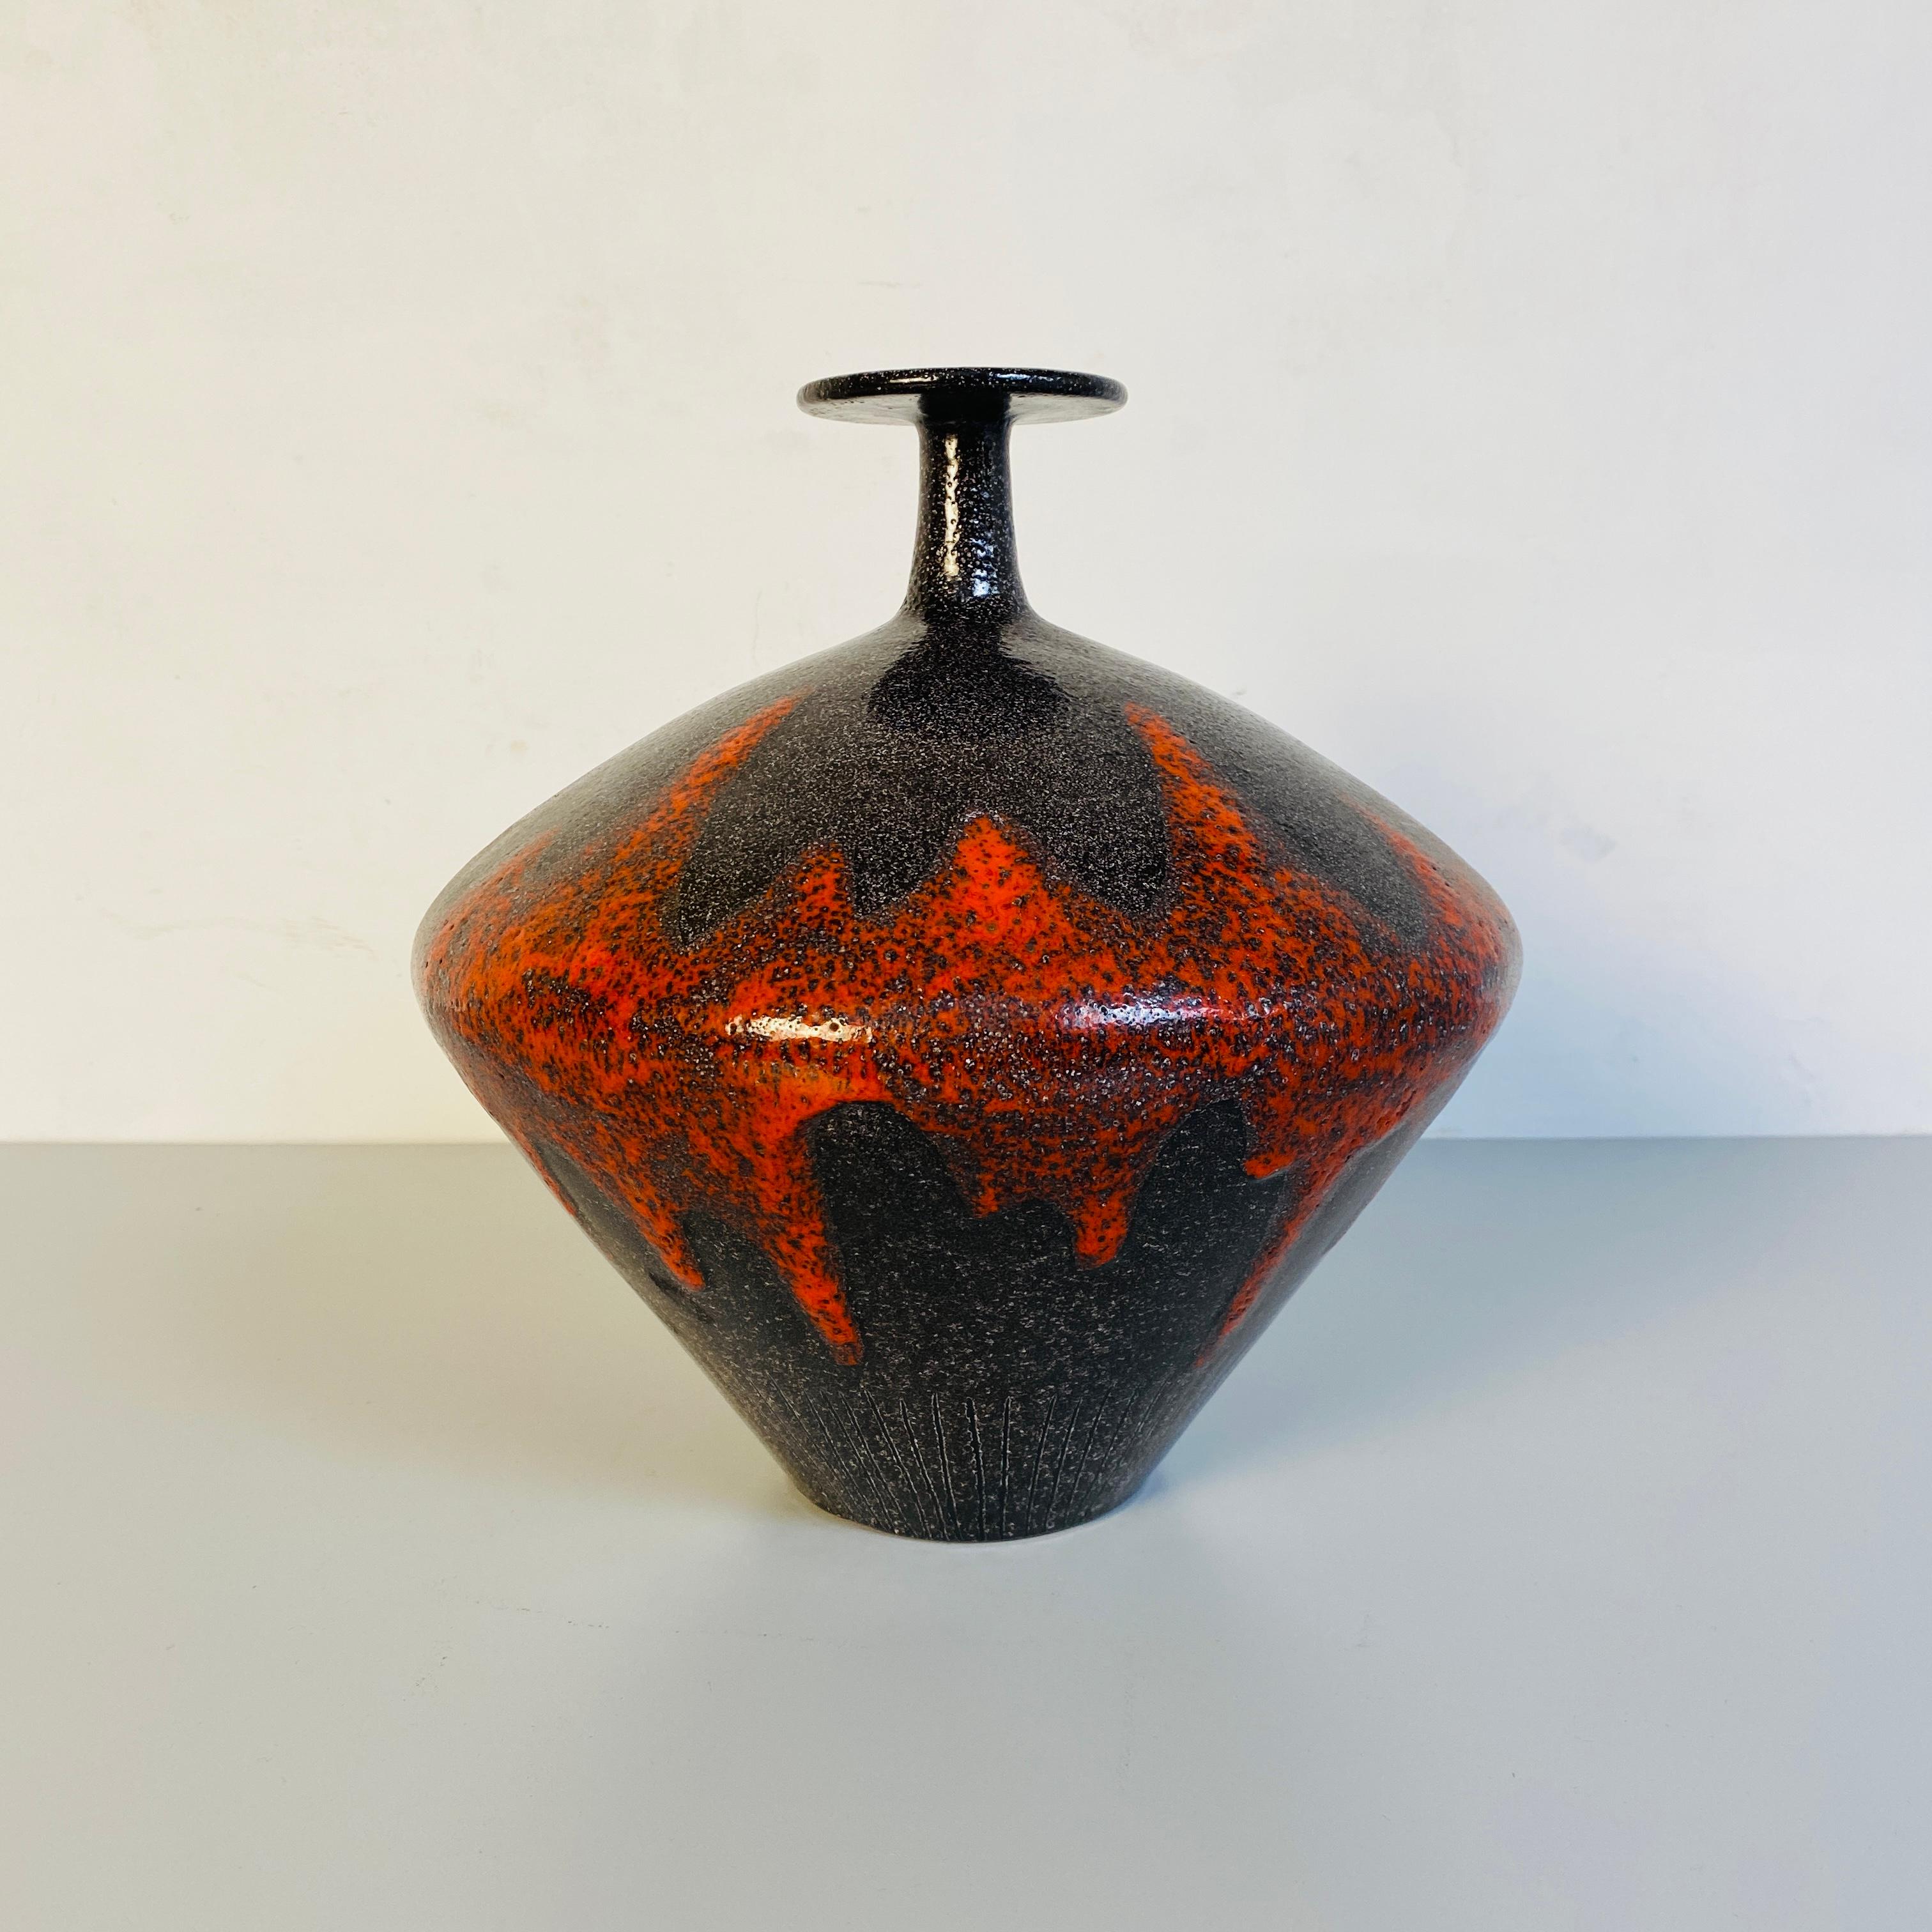 Mid-20th Century Italian Mid-Century Modern Ceramic Vase N 2\707 by San Polo Venezia, 1960s For Sale